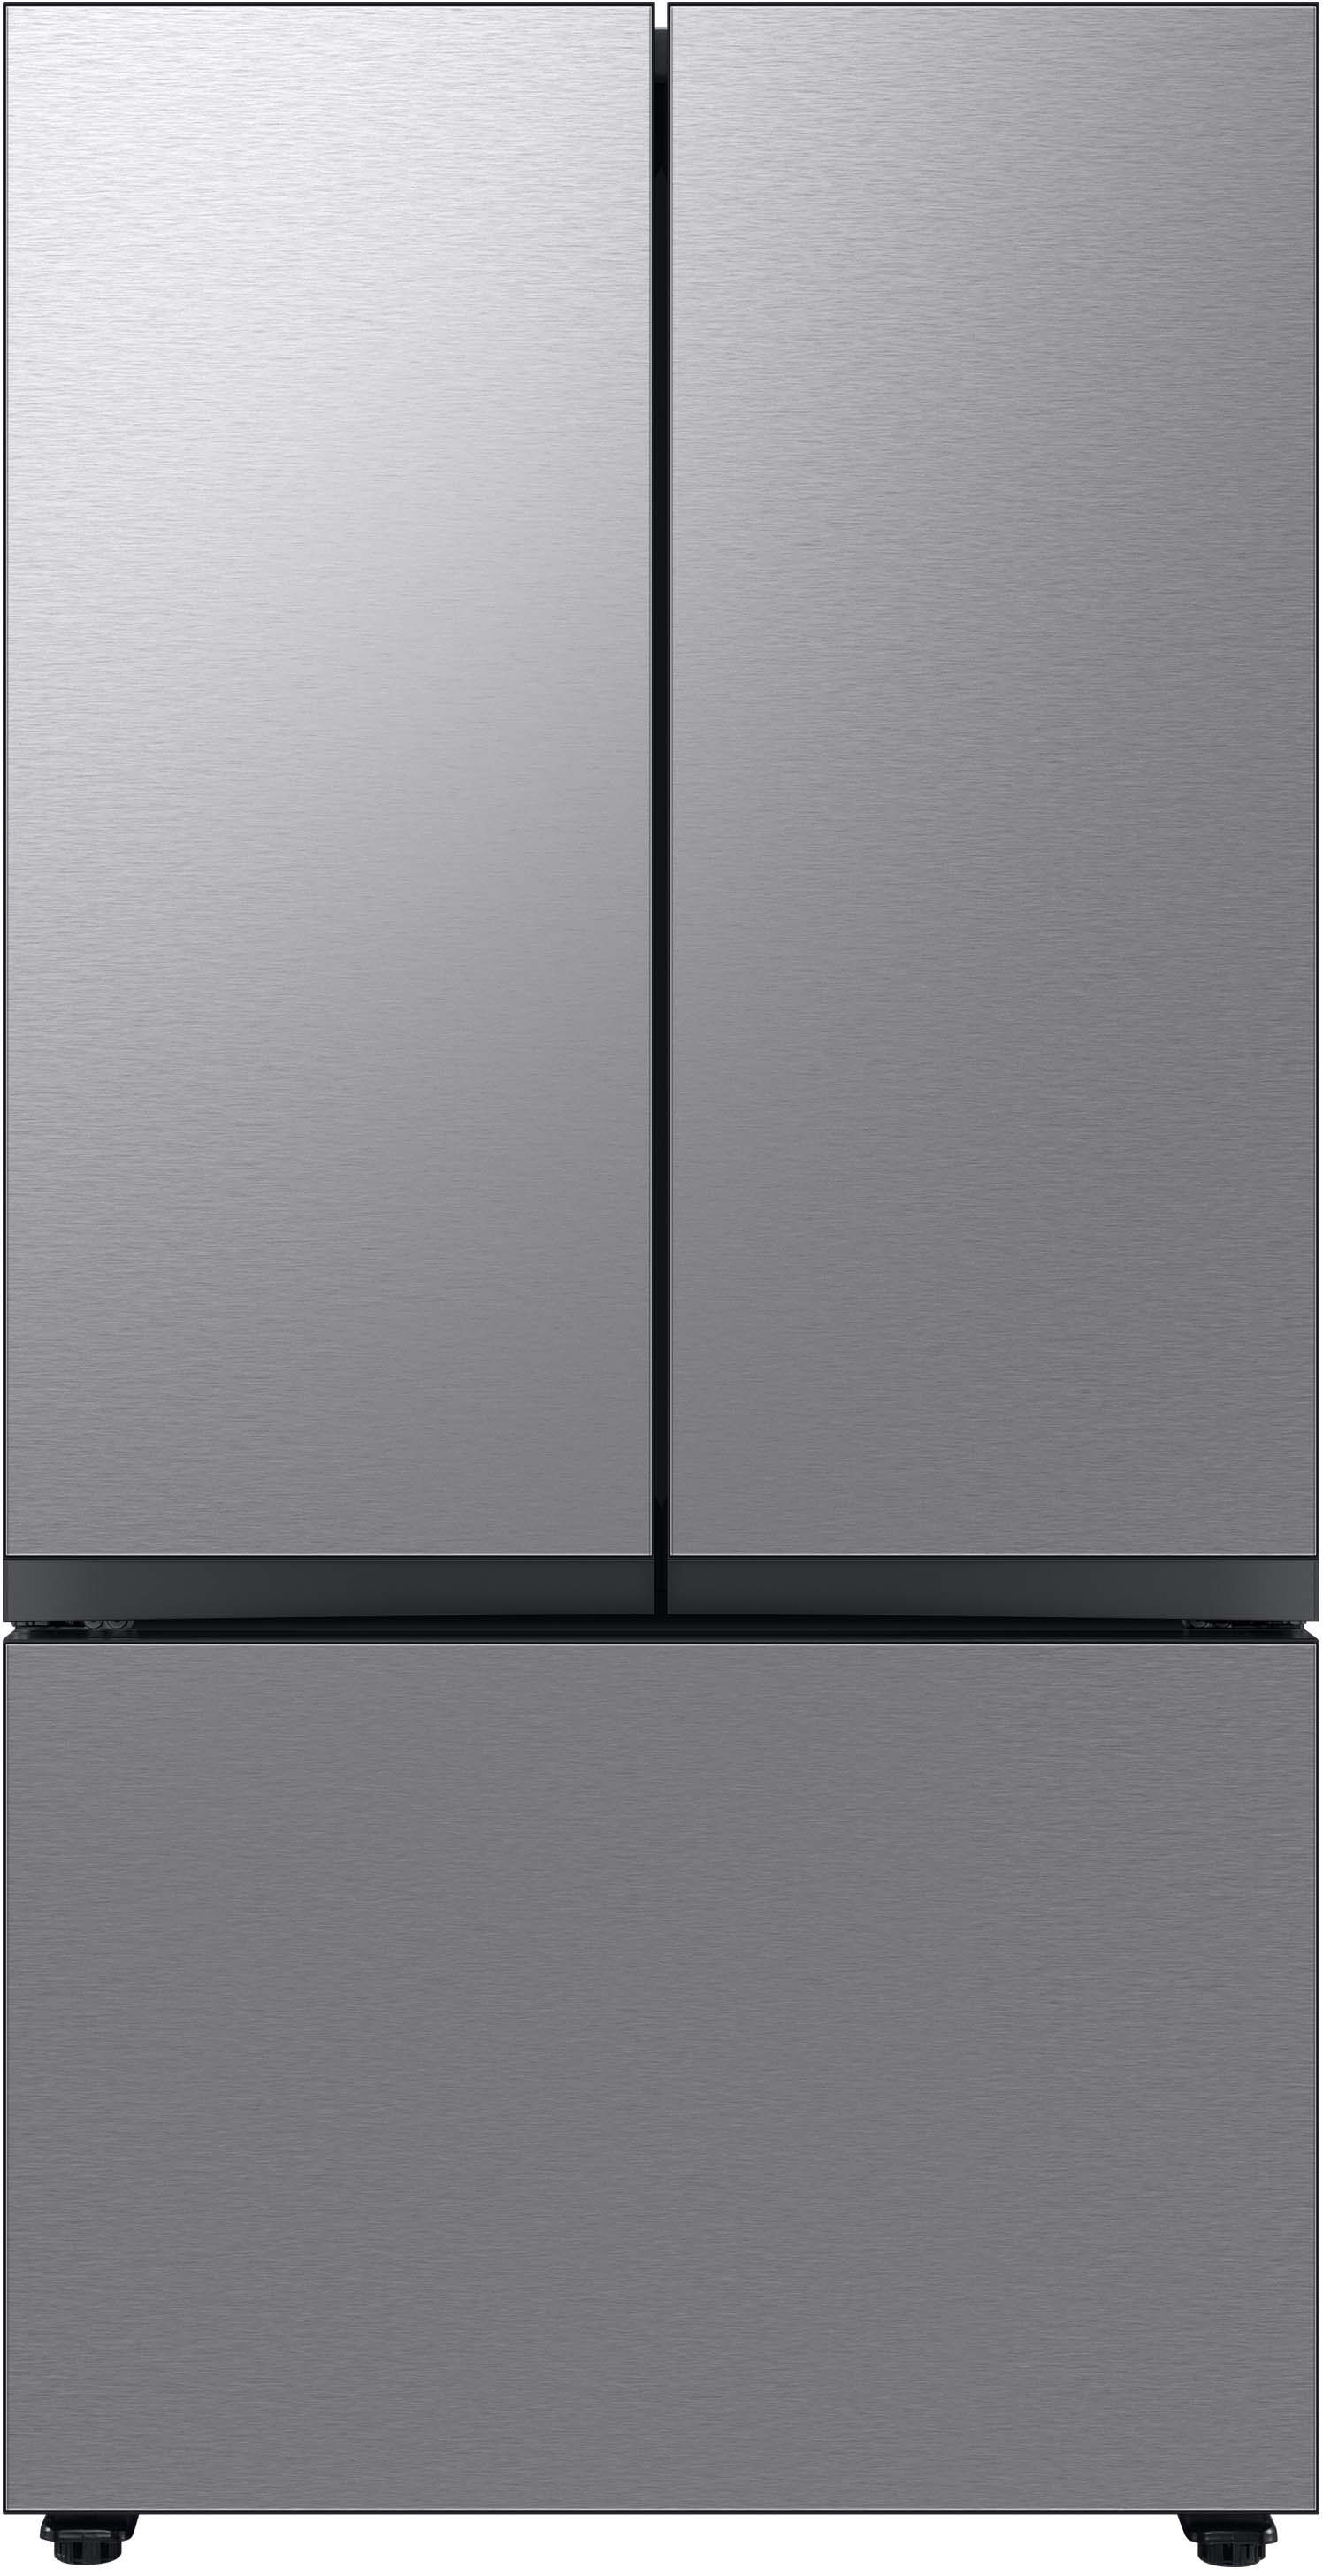 Samsung – 30 cu. ft Bespoke 3-Door French Door Refrigerator with AutoFill Water Pitcher – Stainless steel